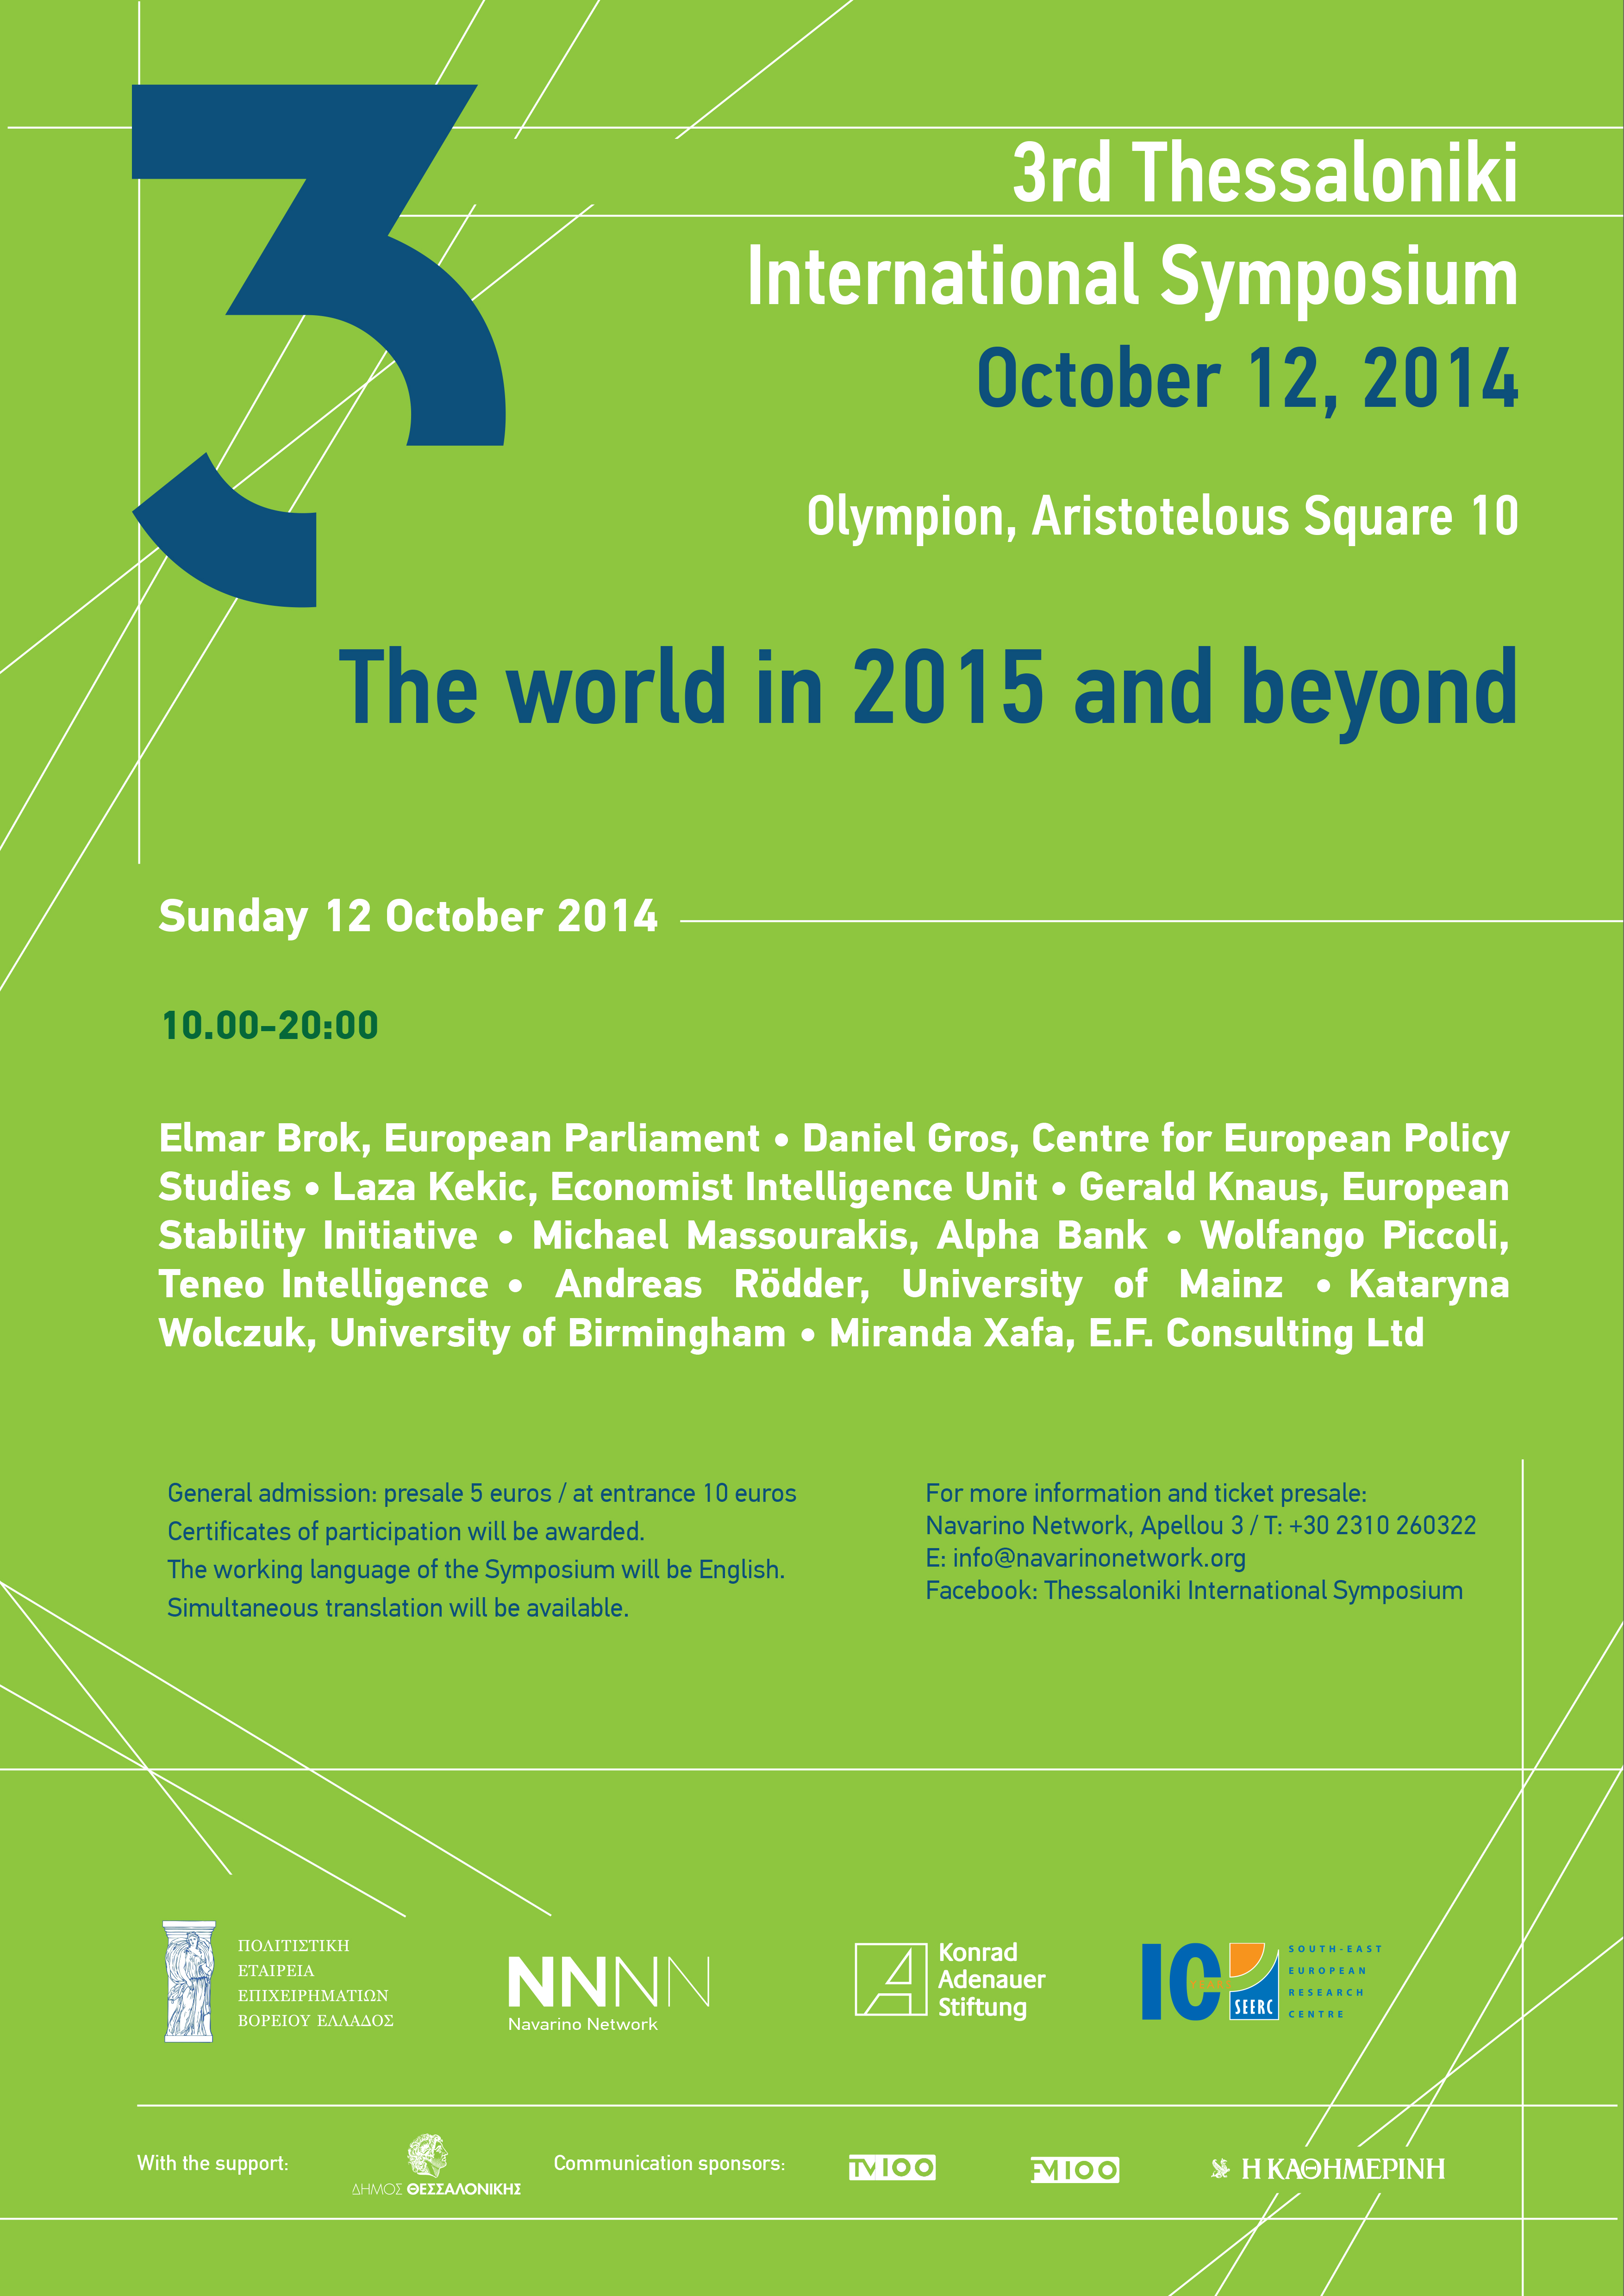 3rd Thessaloniki International Symposium in World Affairs”